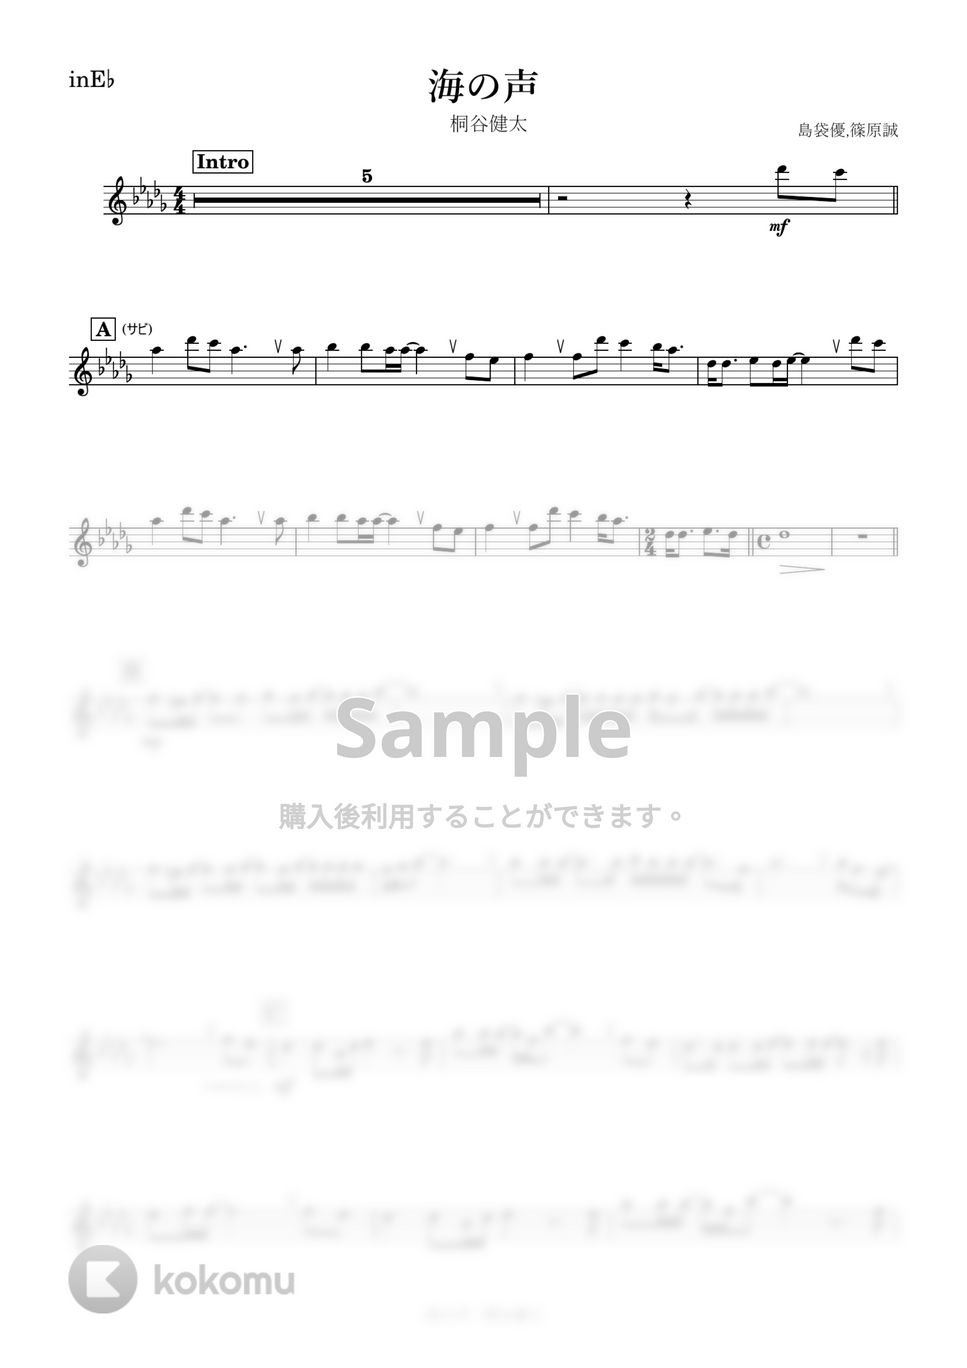 桐谷健太 - 海の声 (E♭) by kanamusic